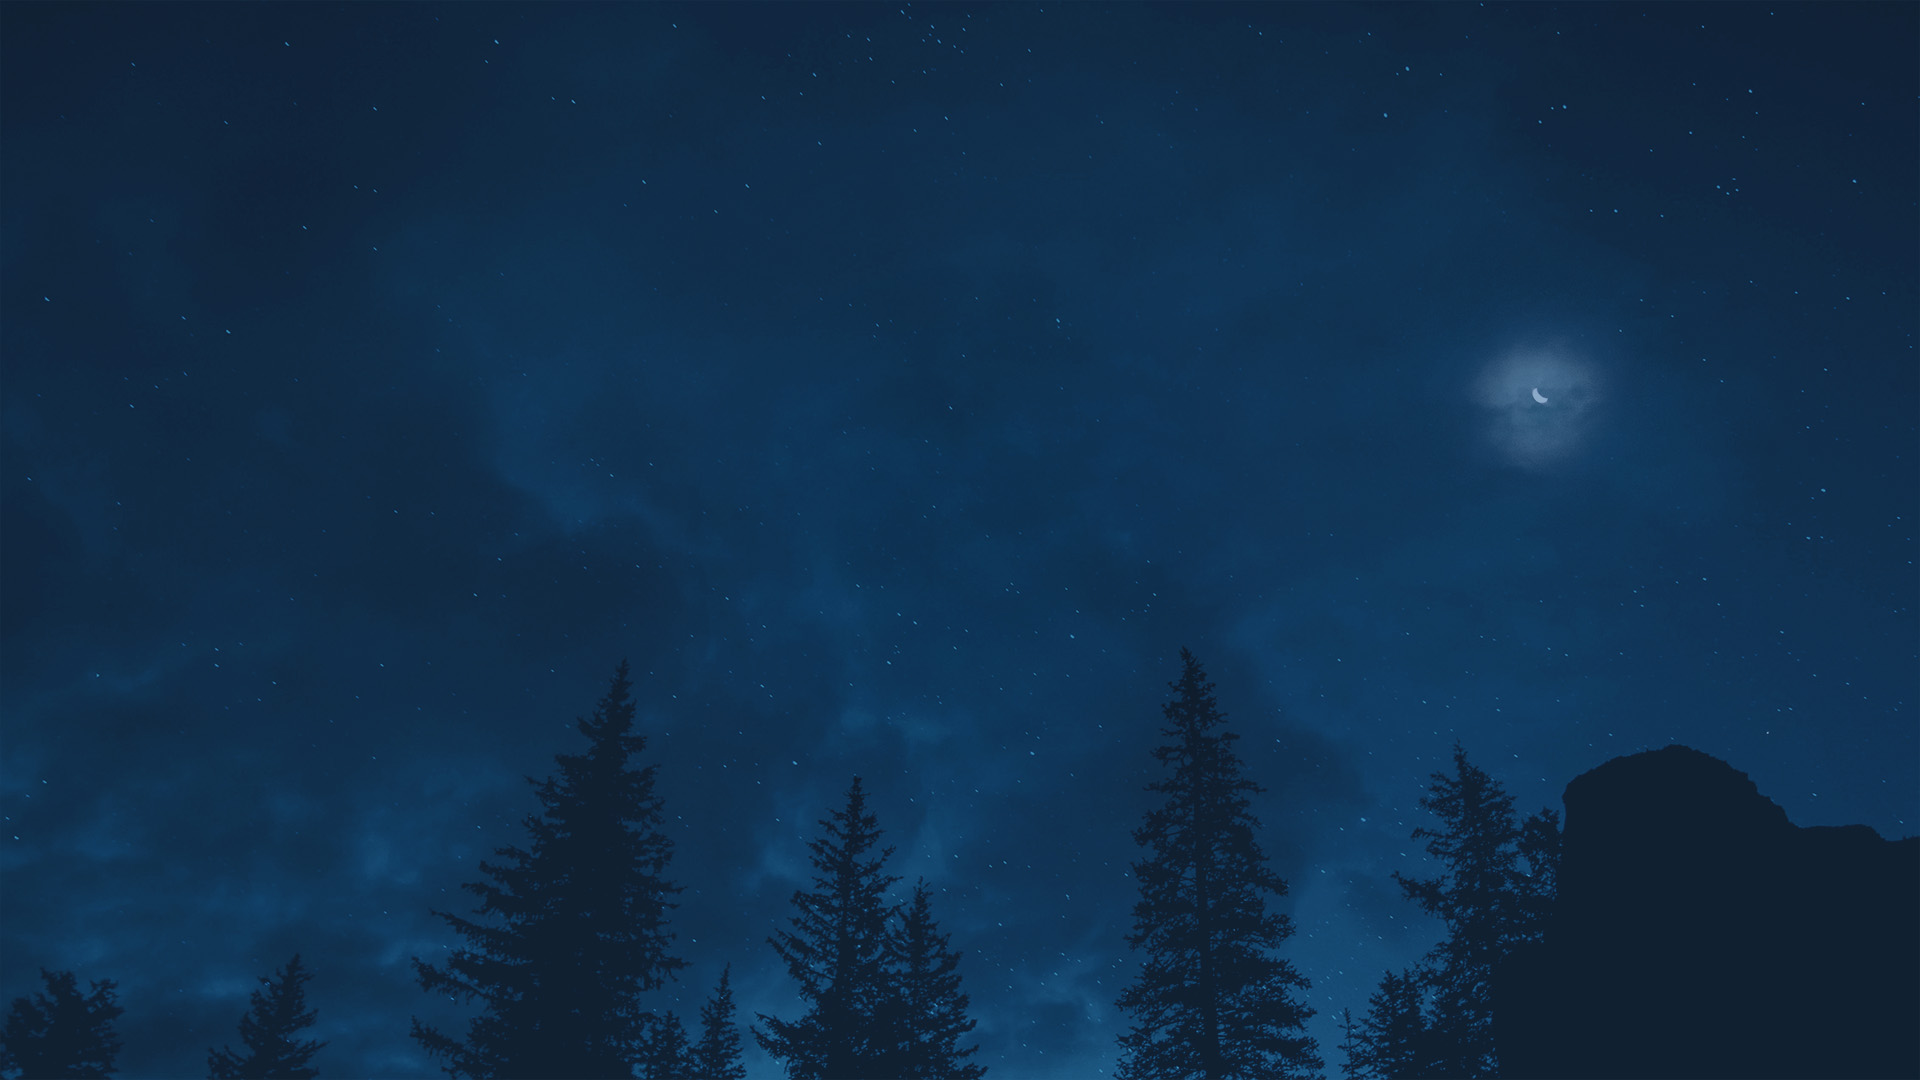 Starry night sky over pine trees